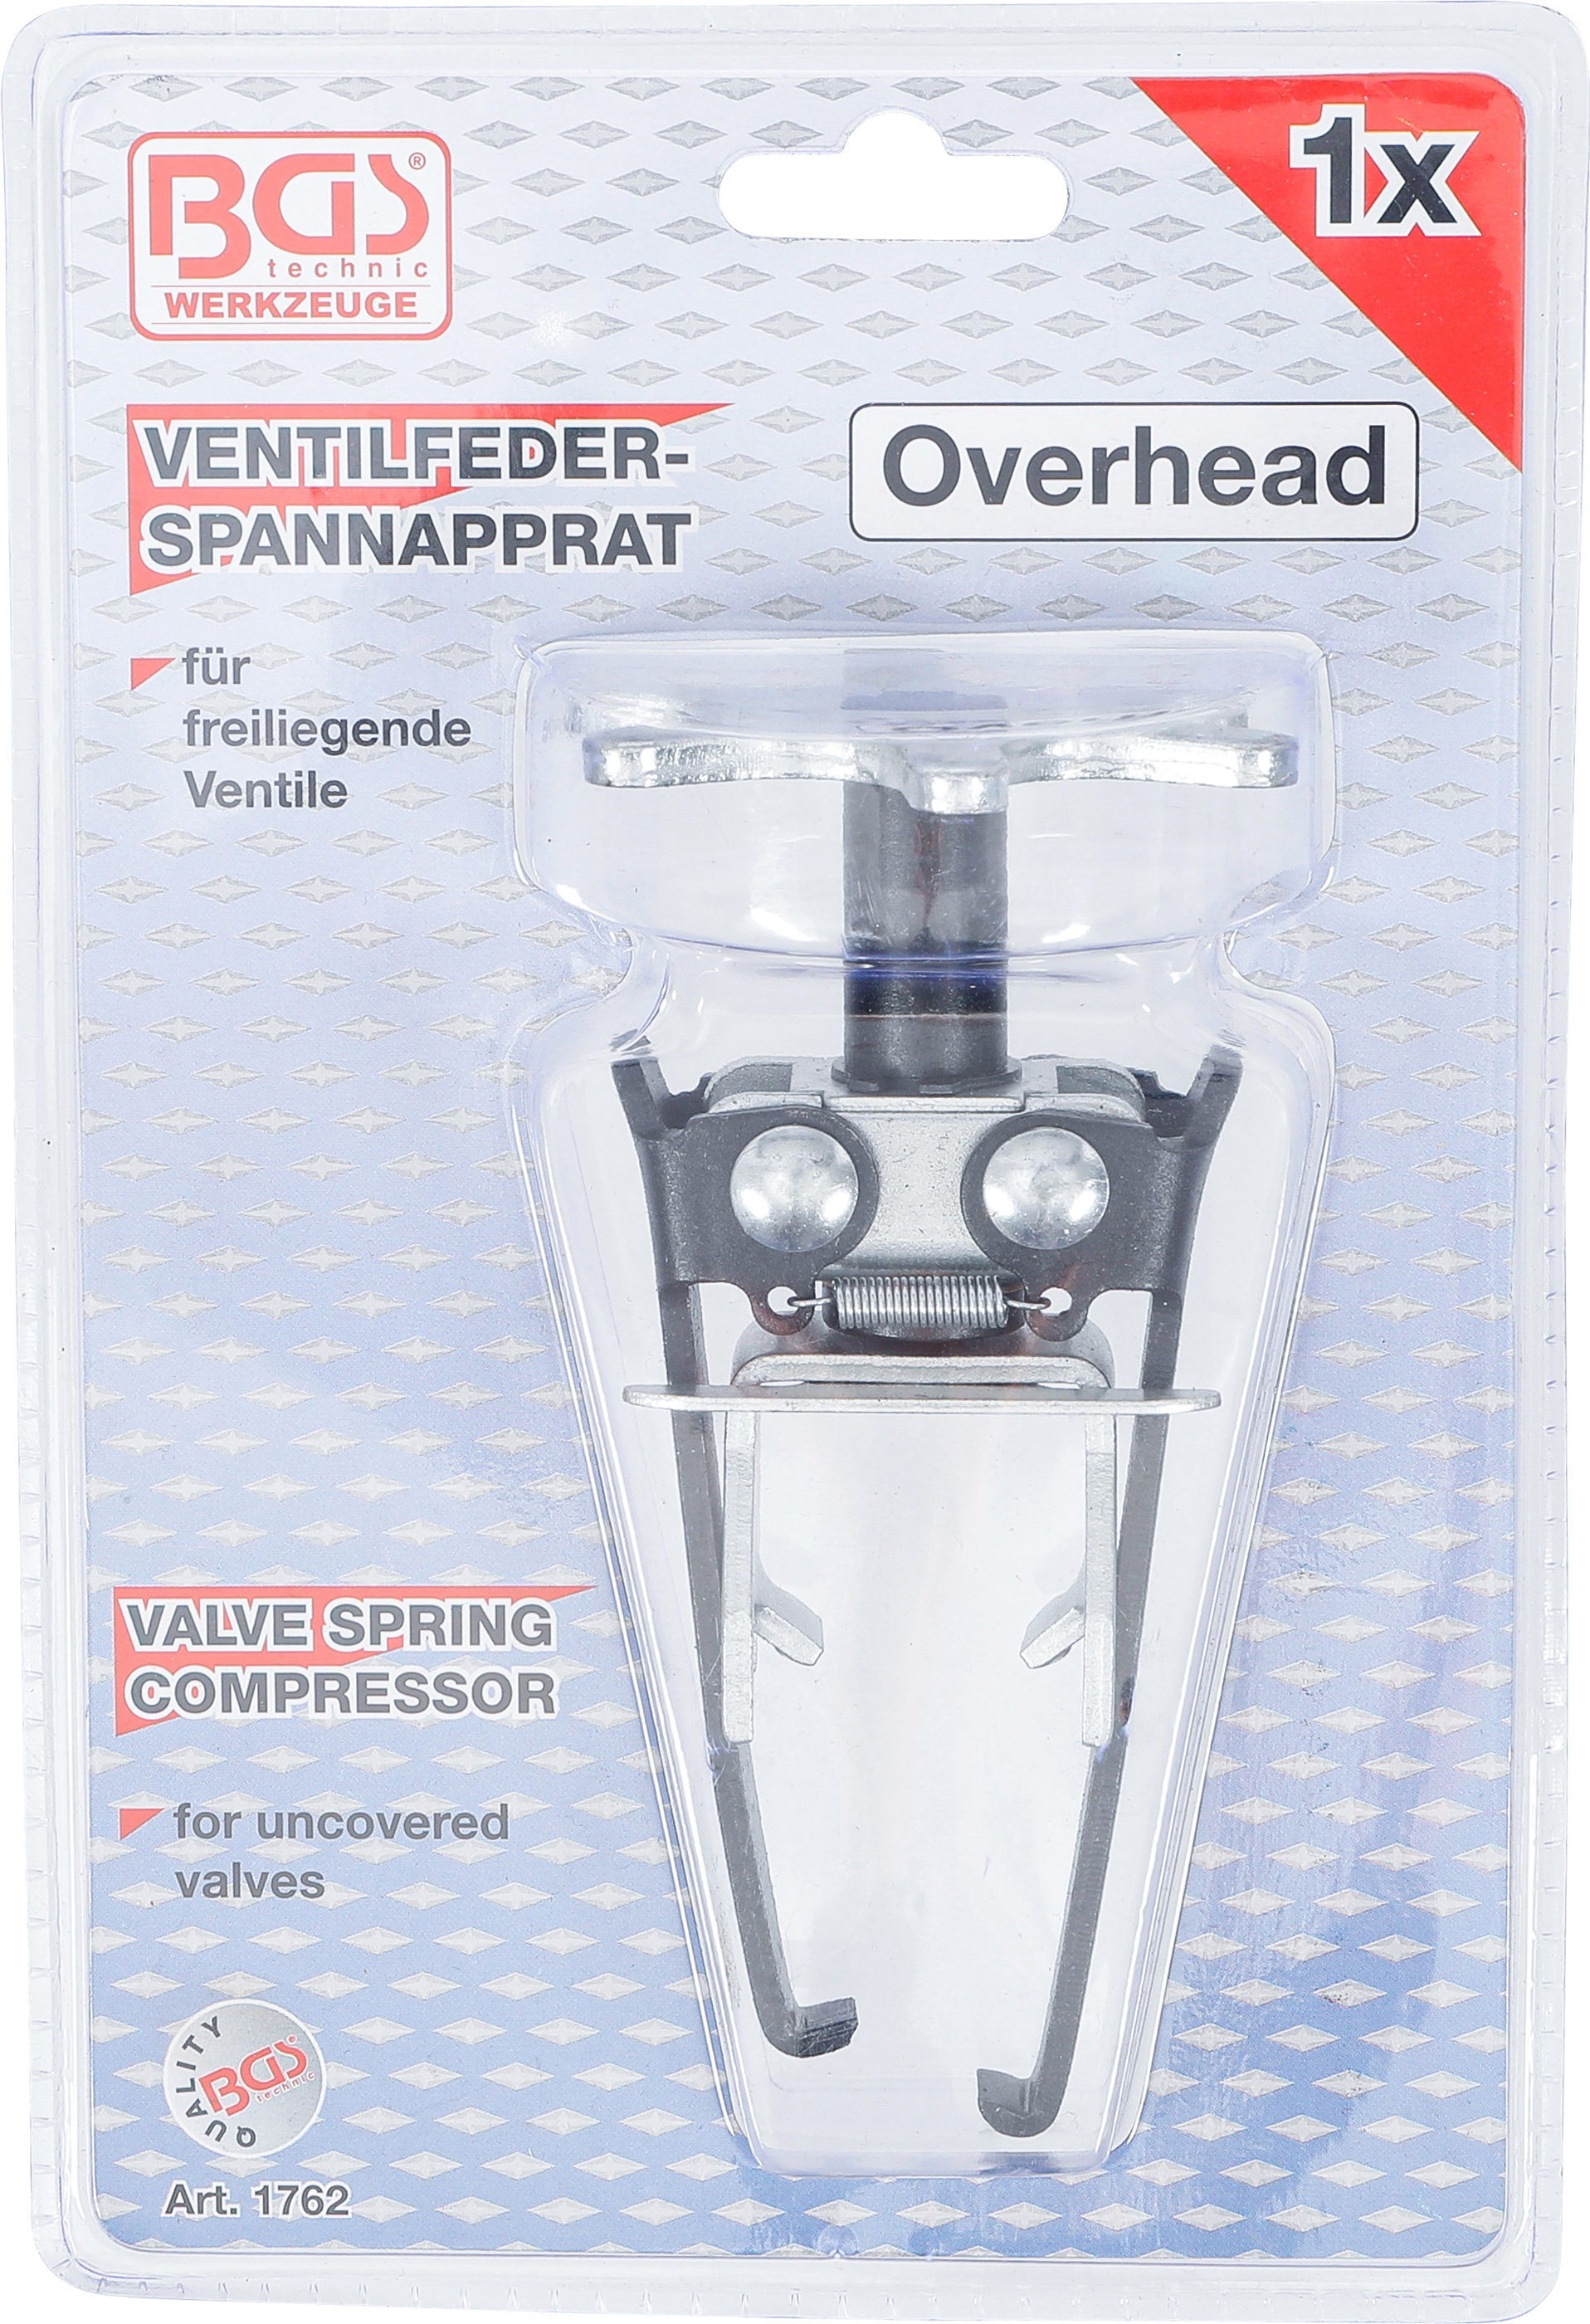 Ventilfeder-Spannapparat Overhead, Ventil & Ventilfeder